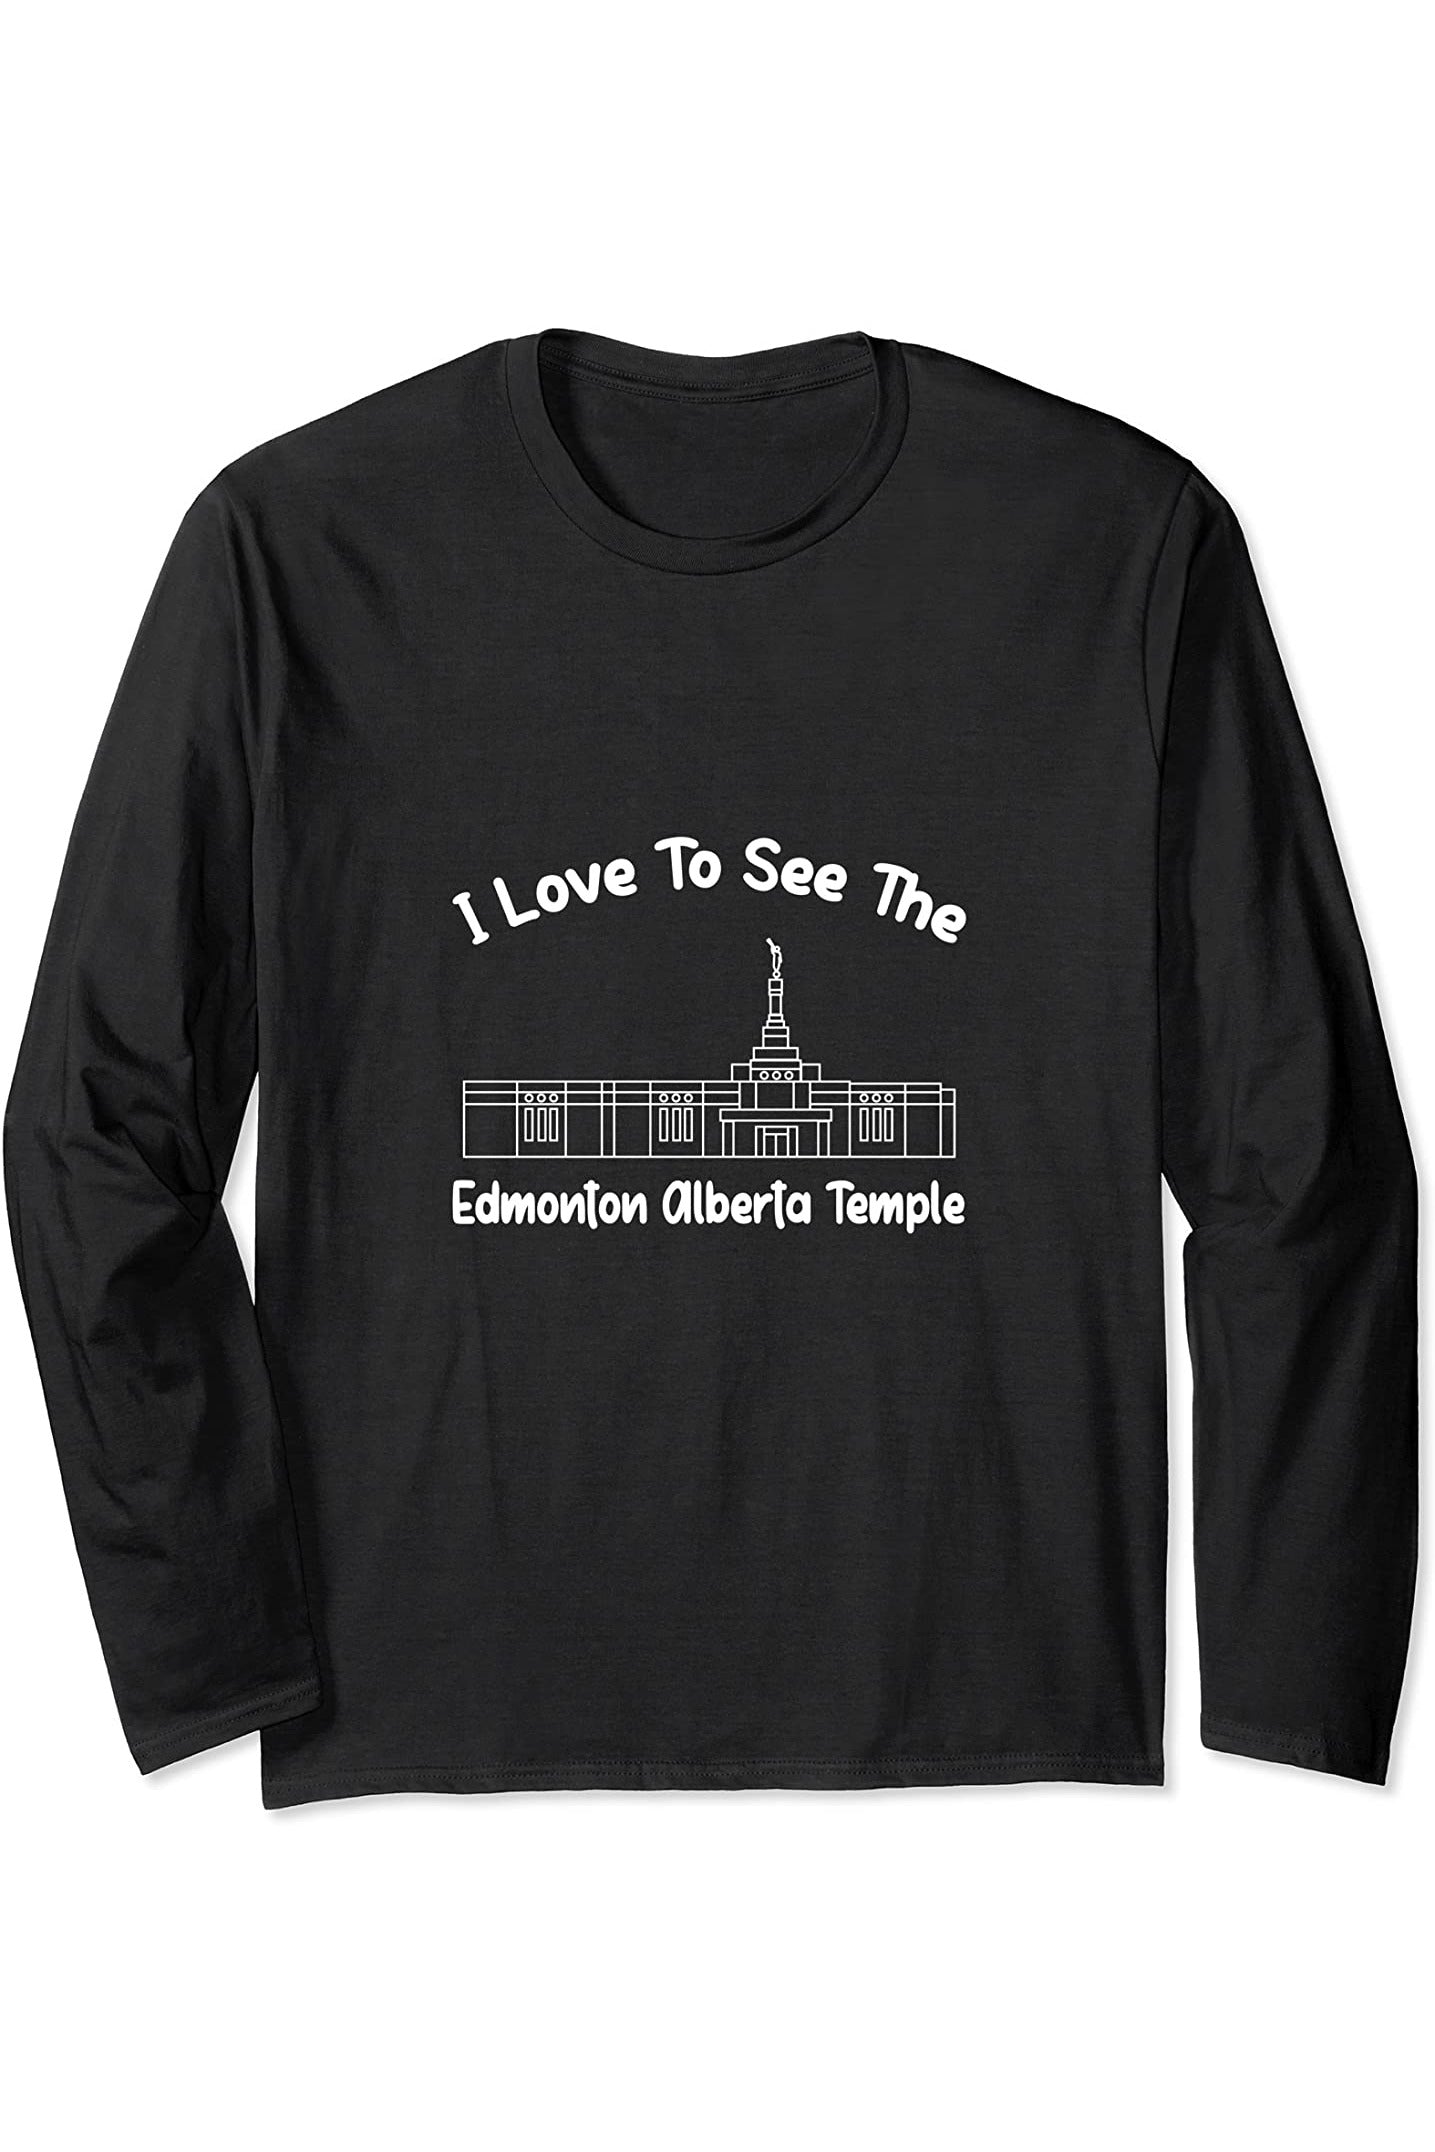 Edmonton Alberta Temple Long Sleeve T-Shirt - Primary Style (English) US